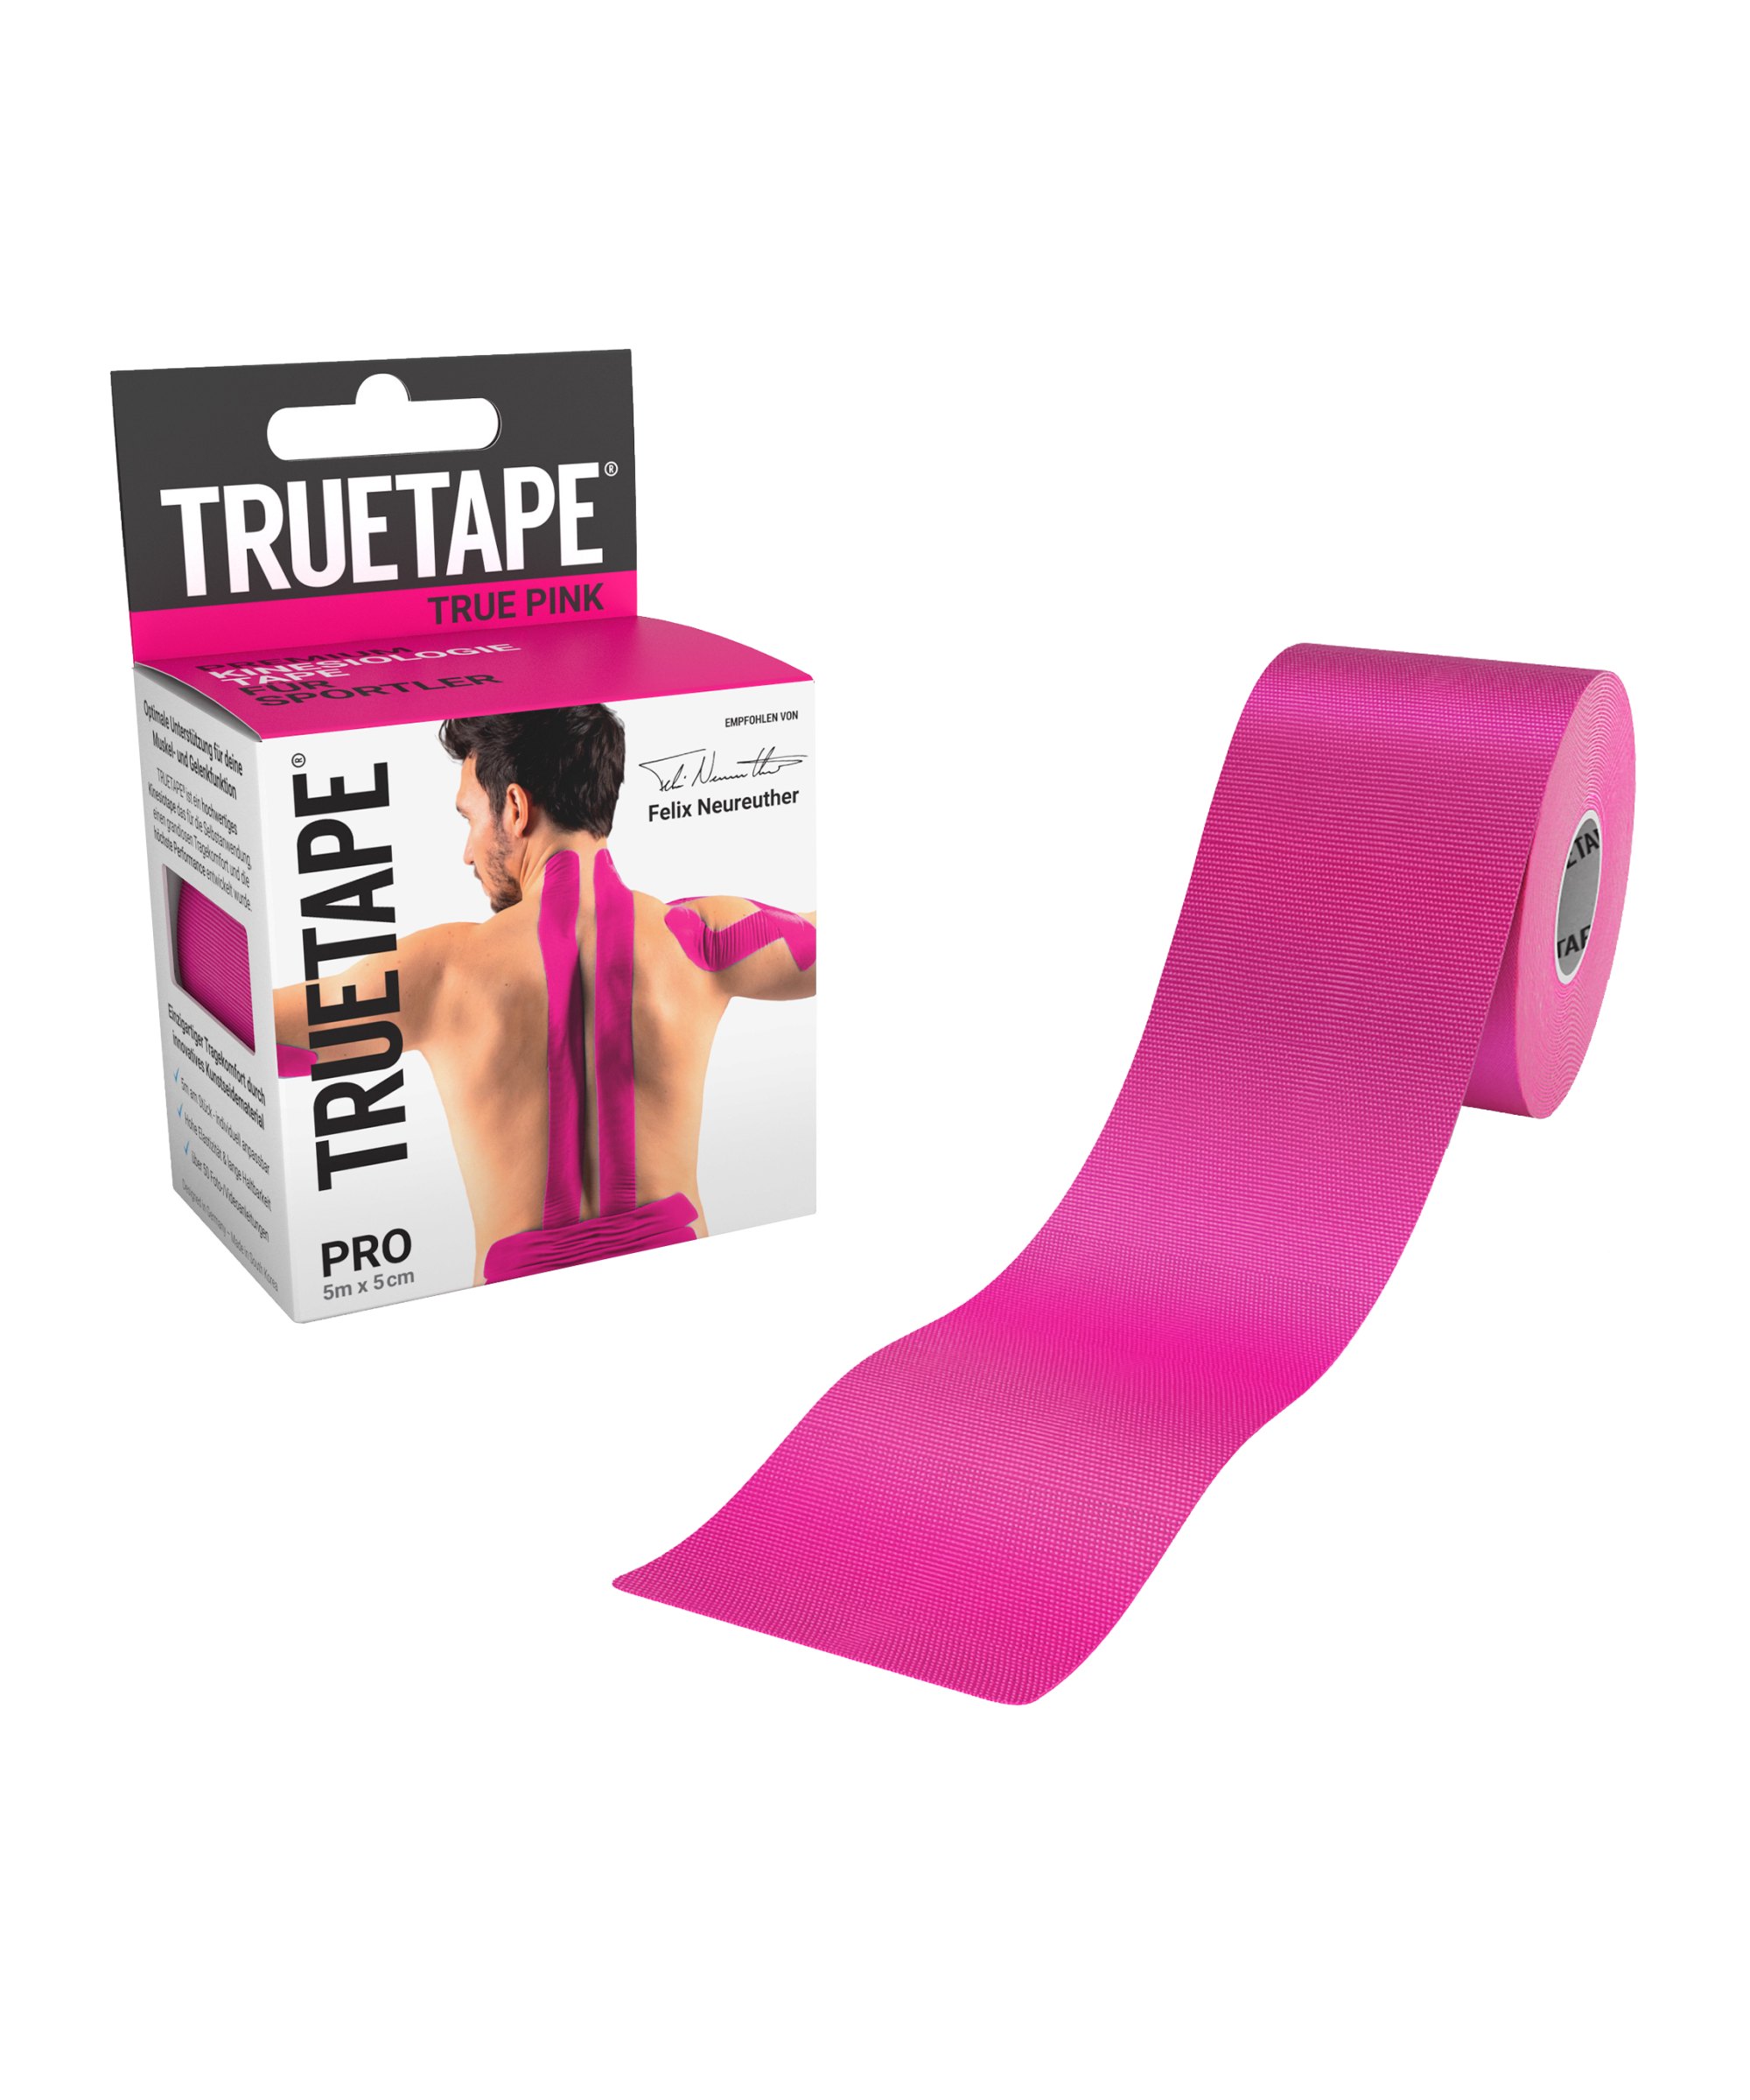 Truetape Athlete Edition Pro Uncut Pink - pink